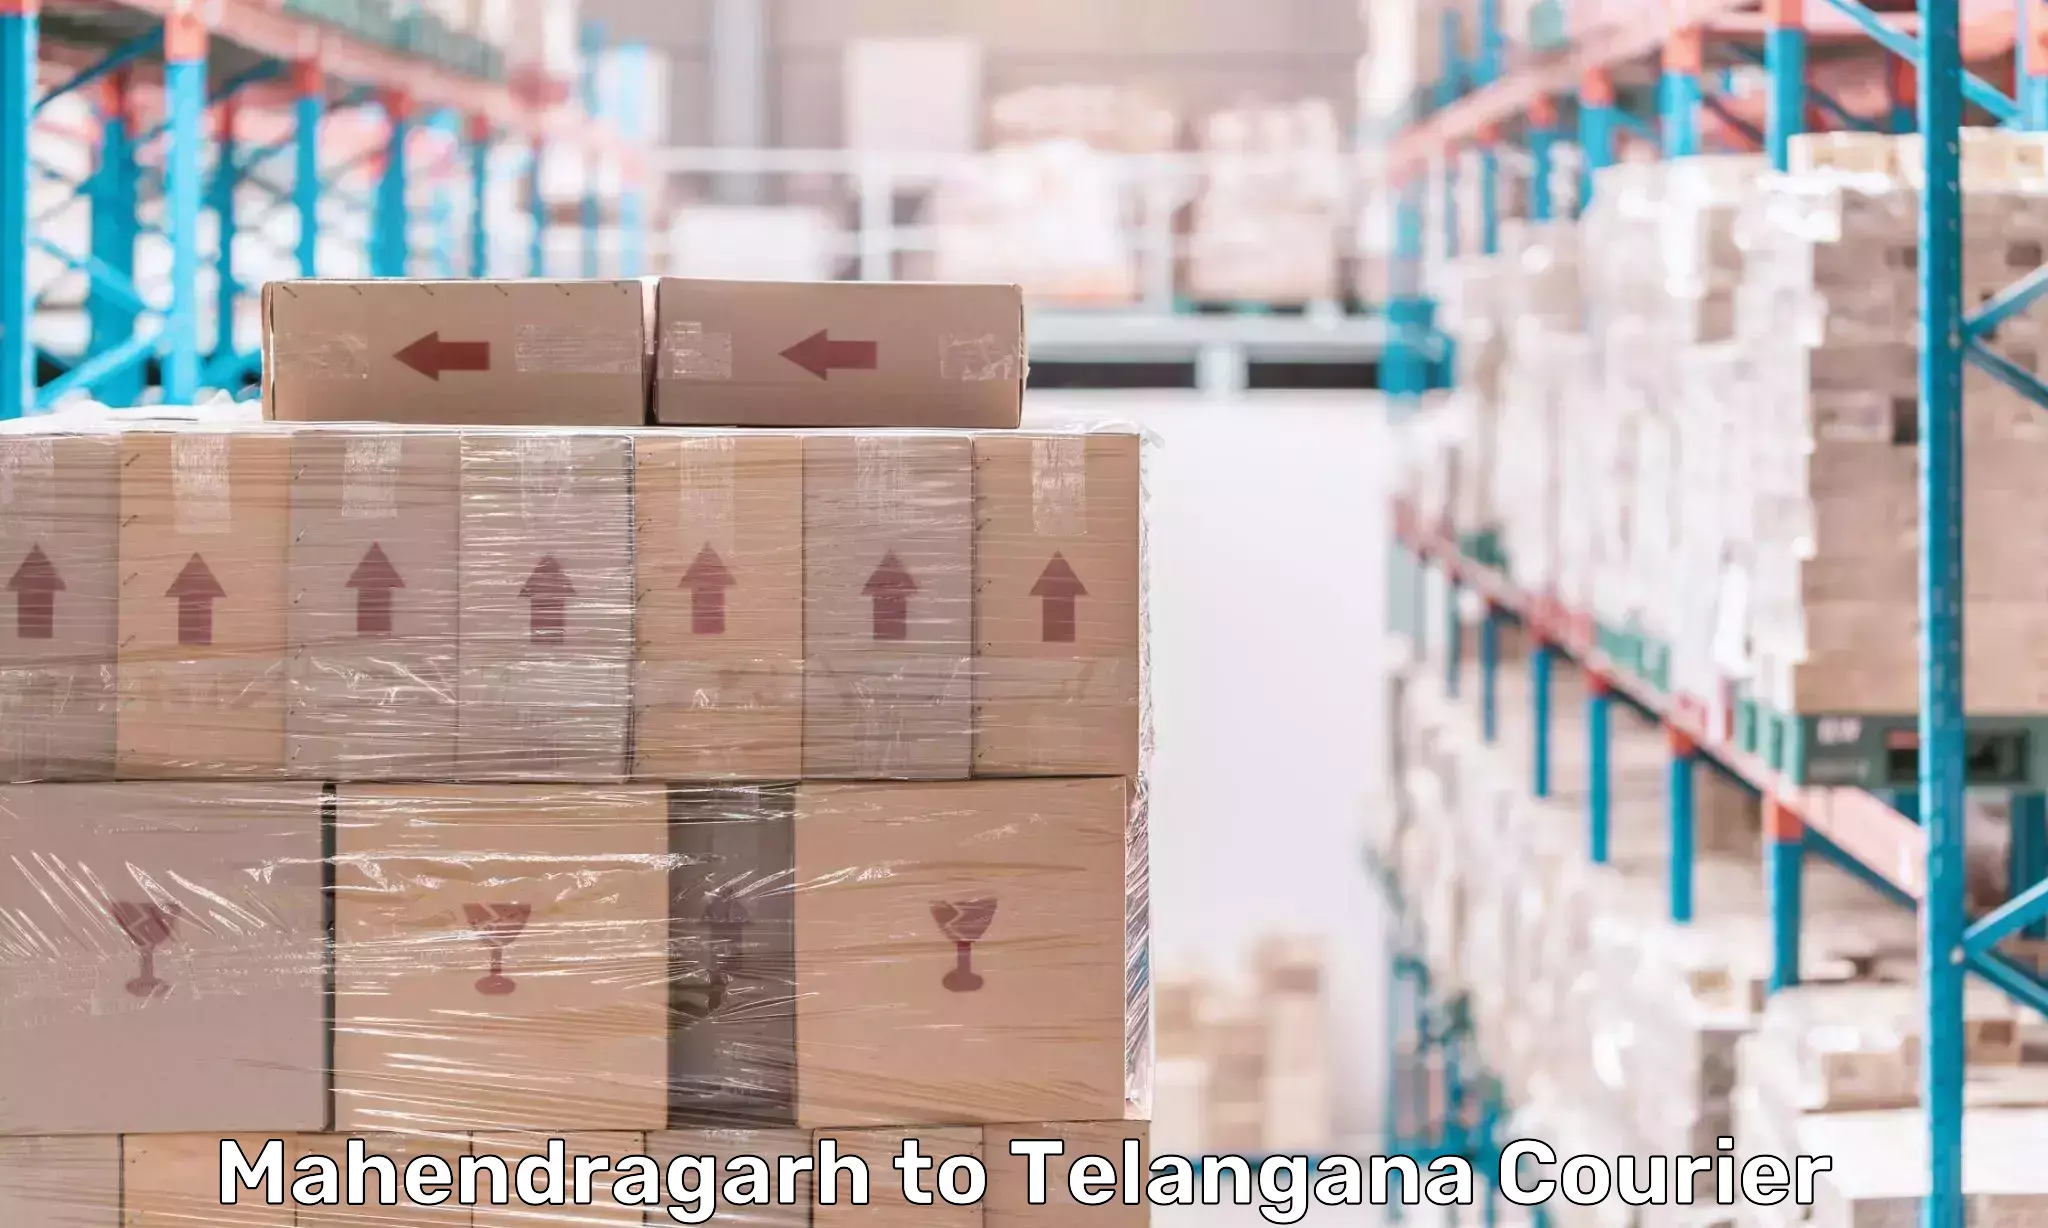 Advanced shipping technology Mahendragarh to Yellareddy